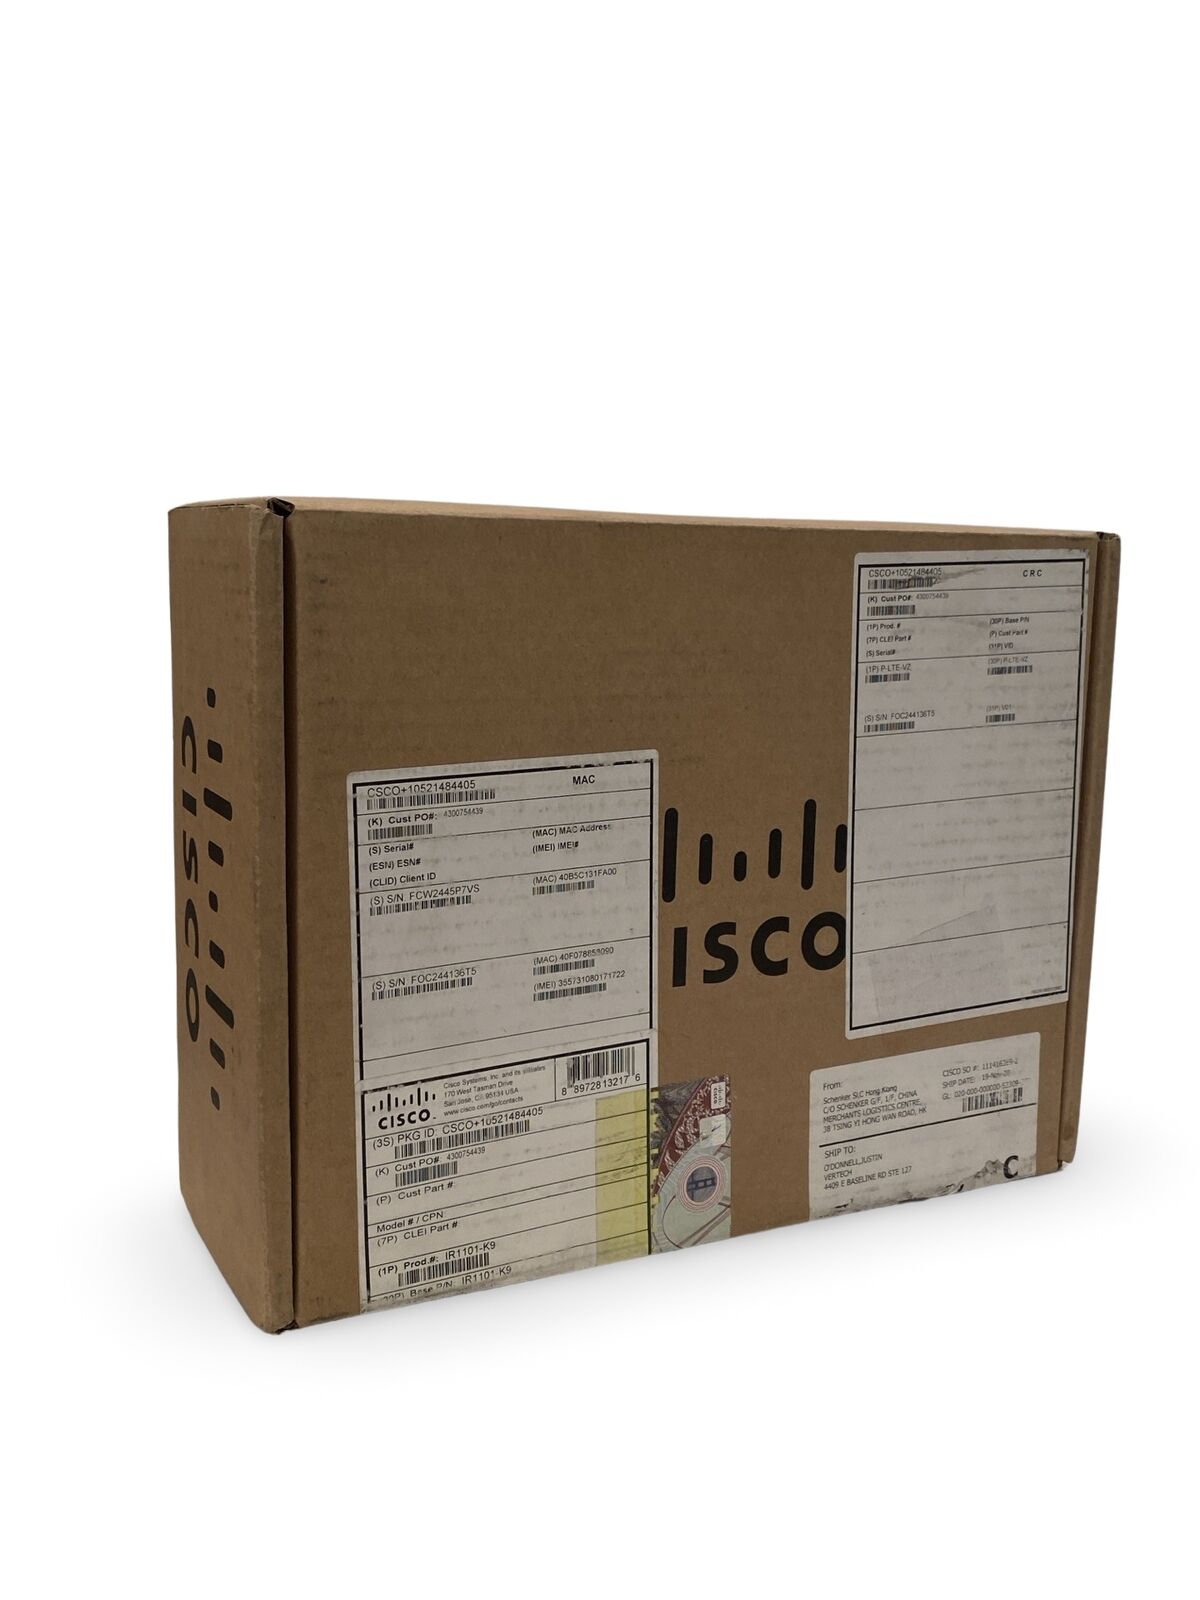 Cisco IR1101-K9 Catalyst Rugged Series Router